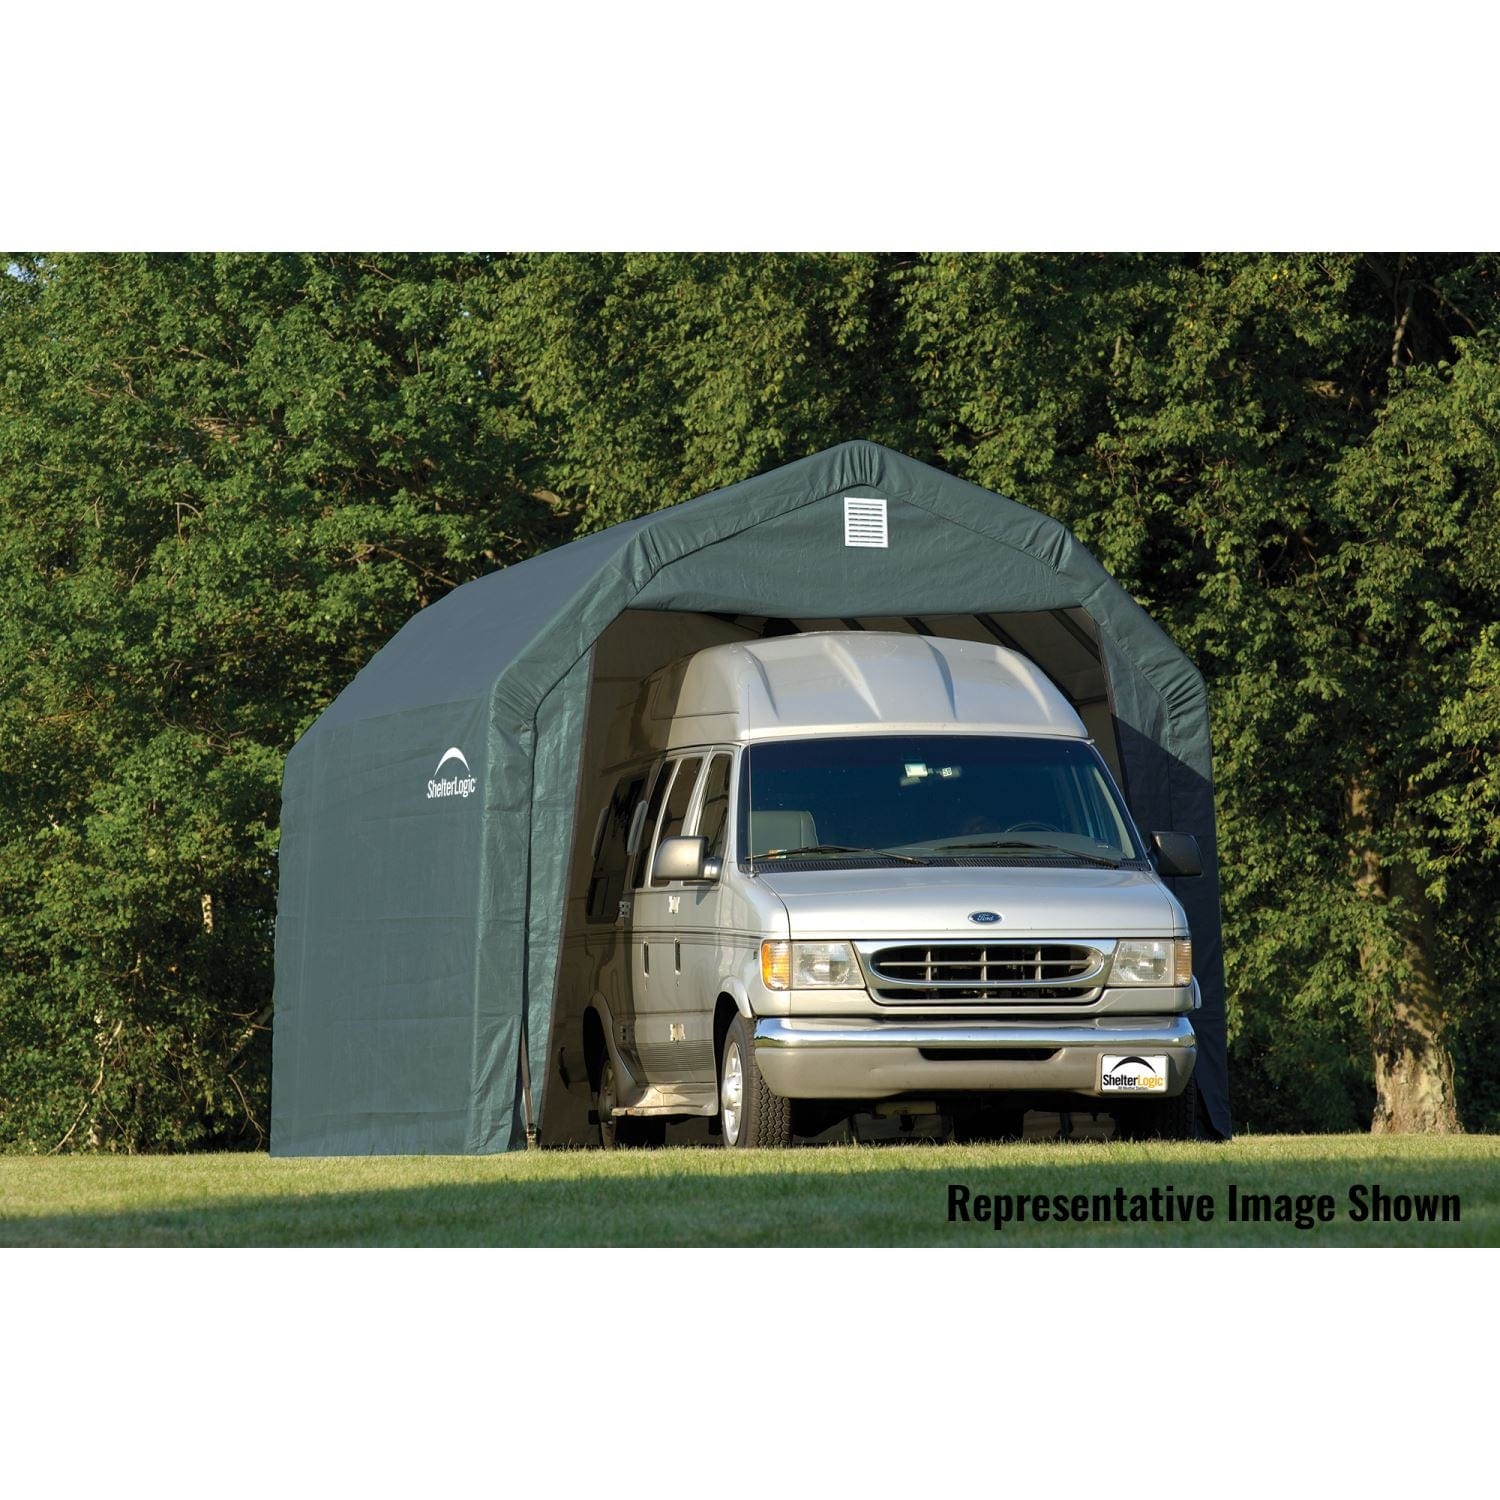 ShelterLogic Garages ShelterLogic | ShelterCoat 12 x 20 ft. Garage Barn Green STD 90054